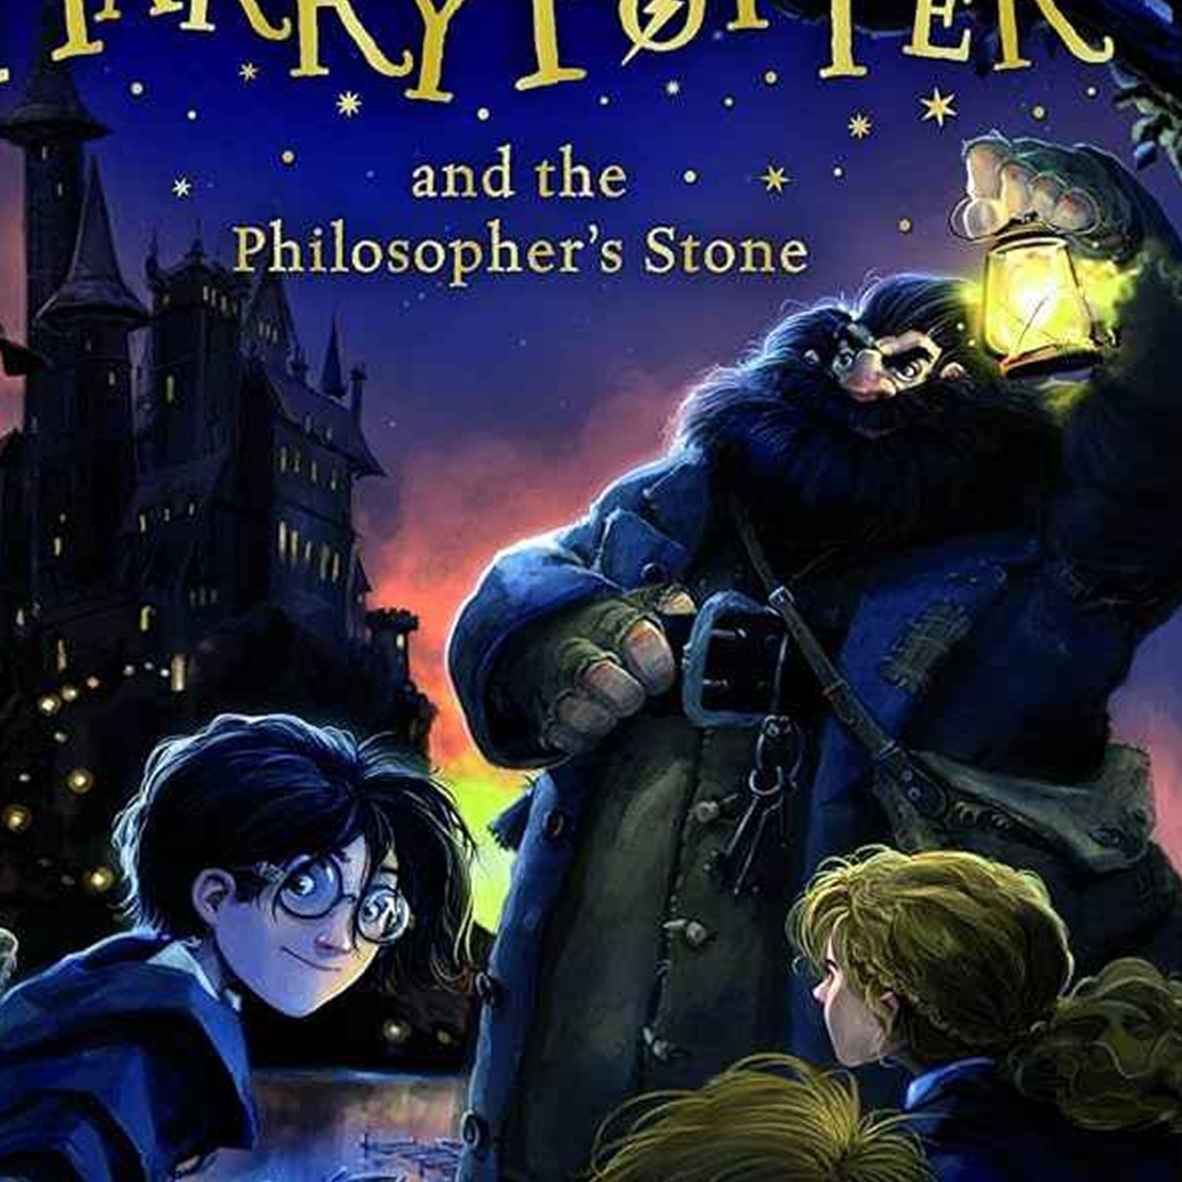 Ringkasan Cerita Harry Potter and the Philosopher's Stone